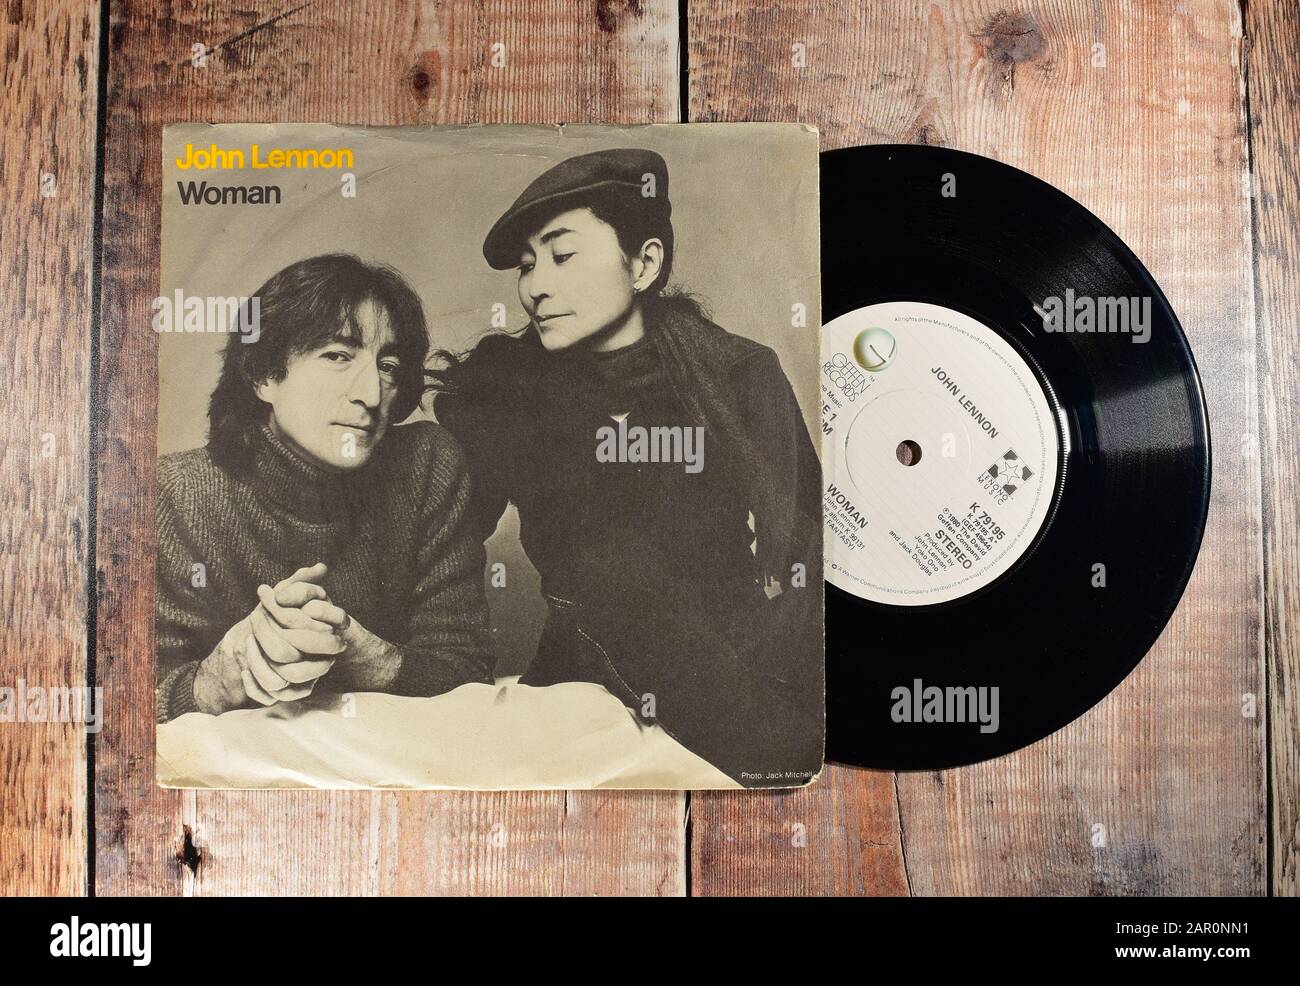 John Lennon - woman 7 inch single Stock Photo - Alamy